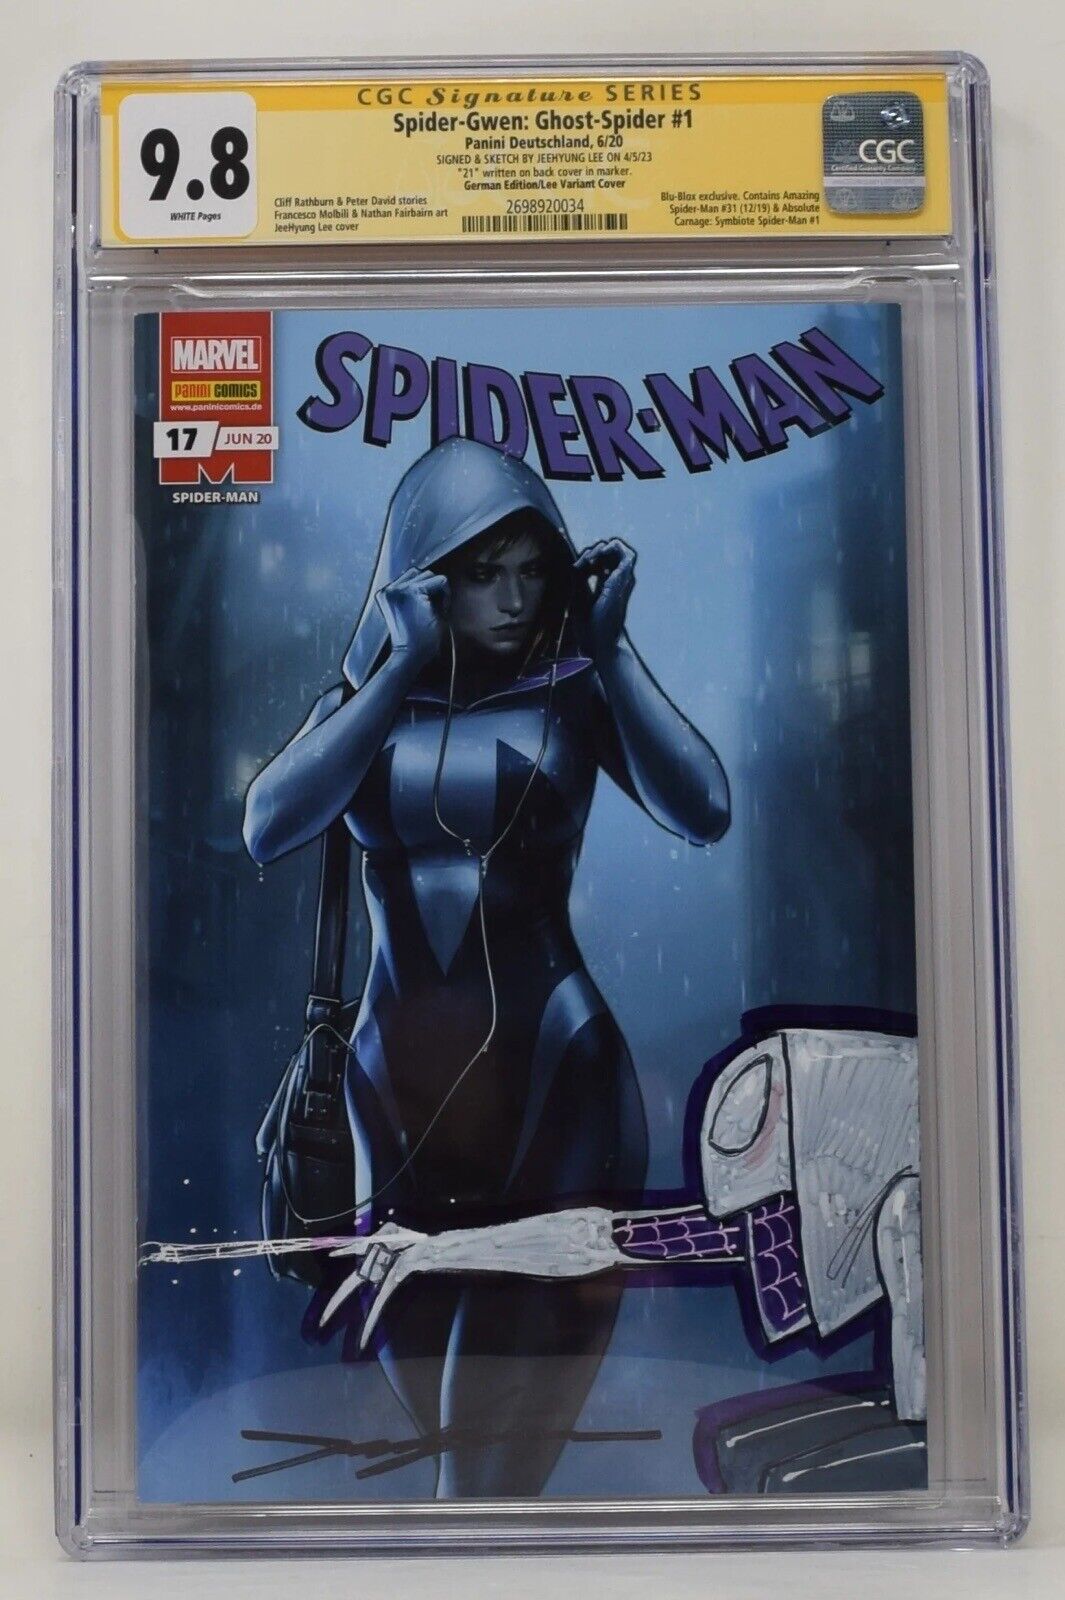 Spider-Gwen Ghost-Spider #1 REMARKED Jeehyung Lee CGC SS 9.8 Marvel 2020 1:100